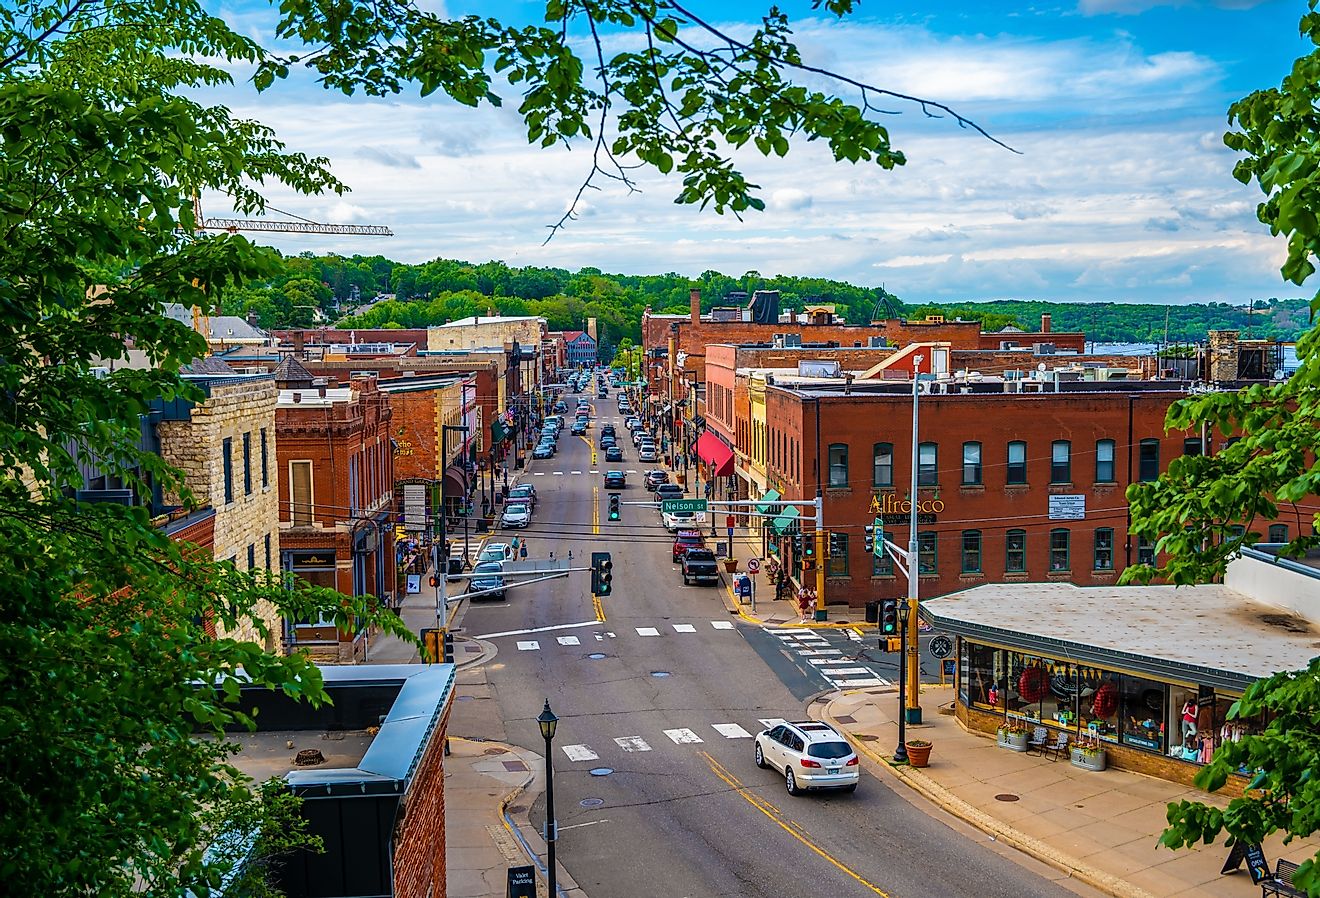 Overlooking downtown Stillwater, Minnesota. Image credit Cheri Alguire via Shutterstock